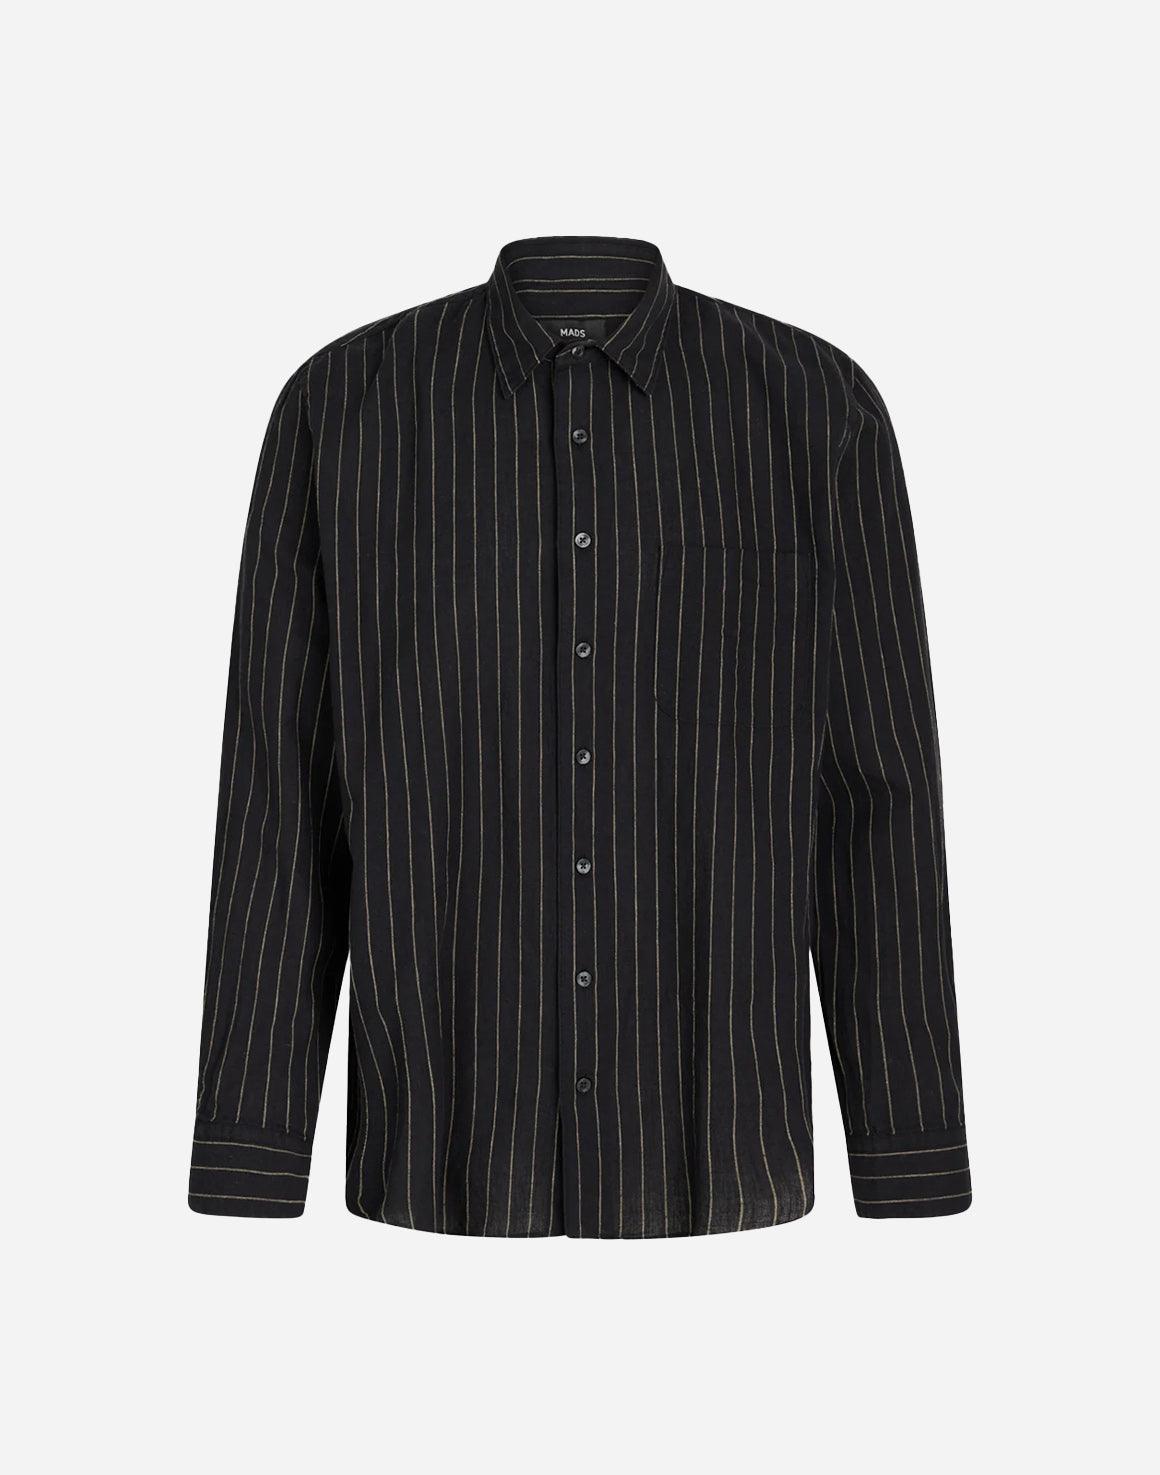 Cotton Linen Malte Shirt - Black - Mads Nørgaard - Kul og Koks